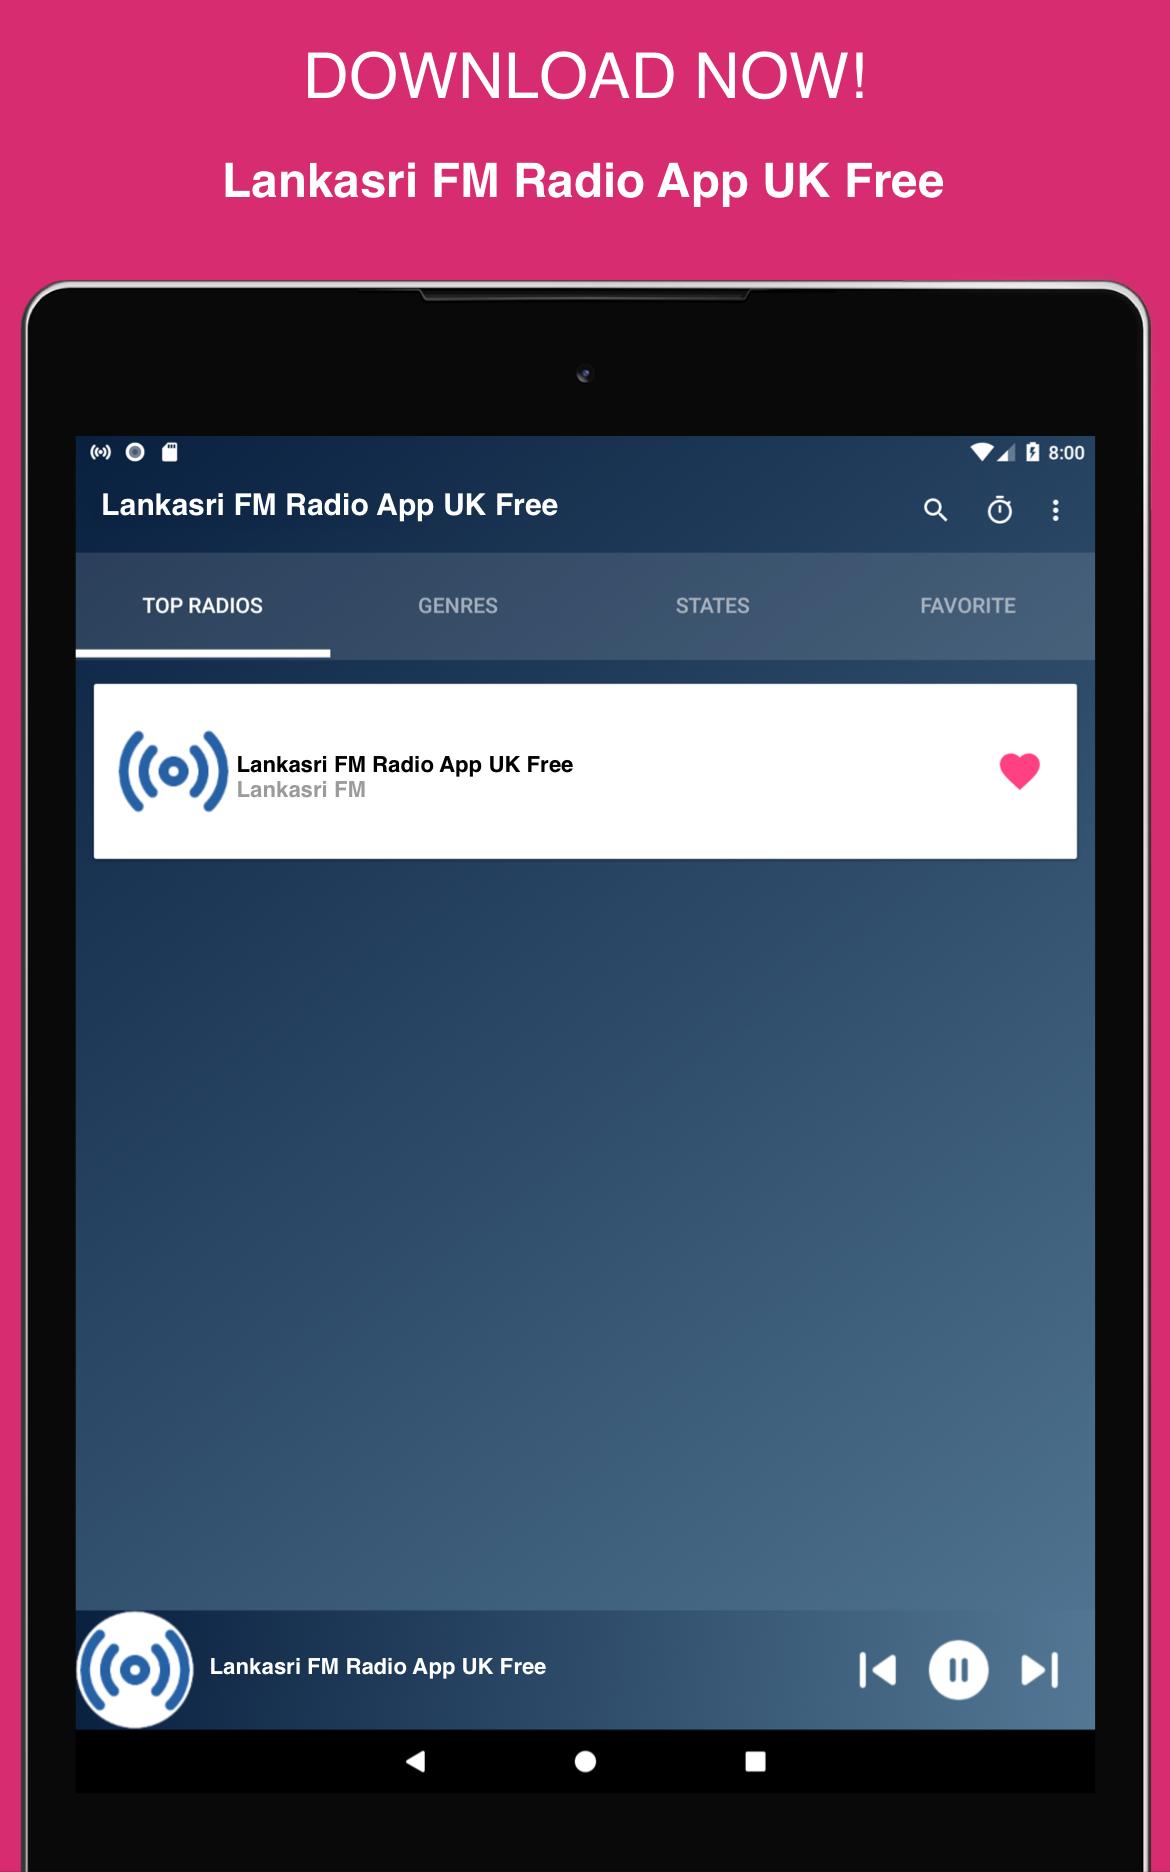 Lankasri FM Radio App UK Free for Android - APK Download